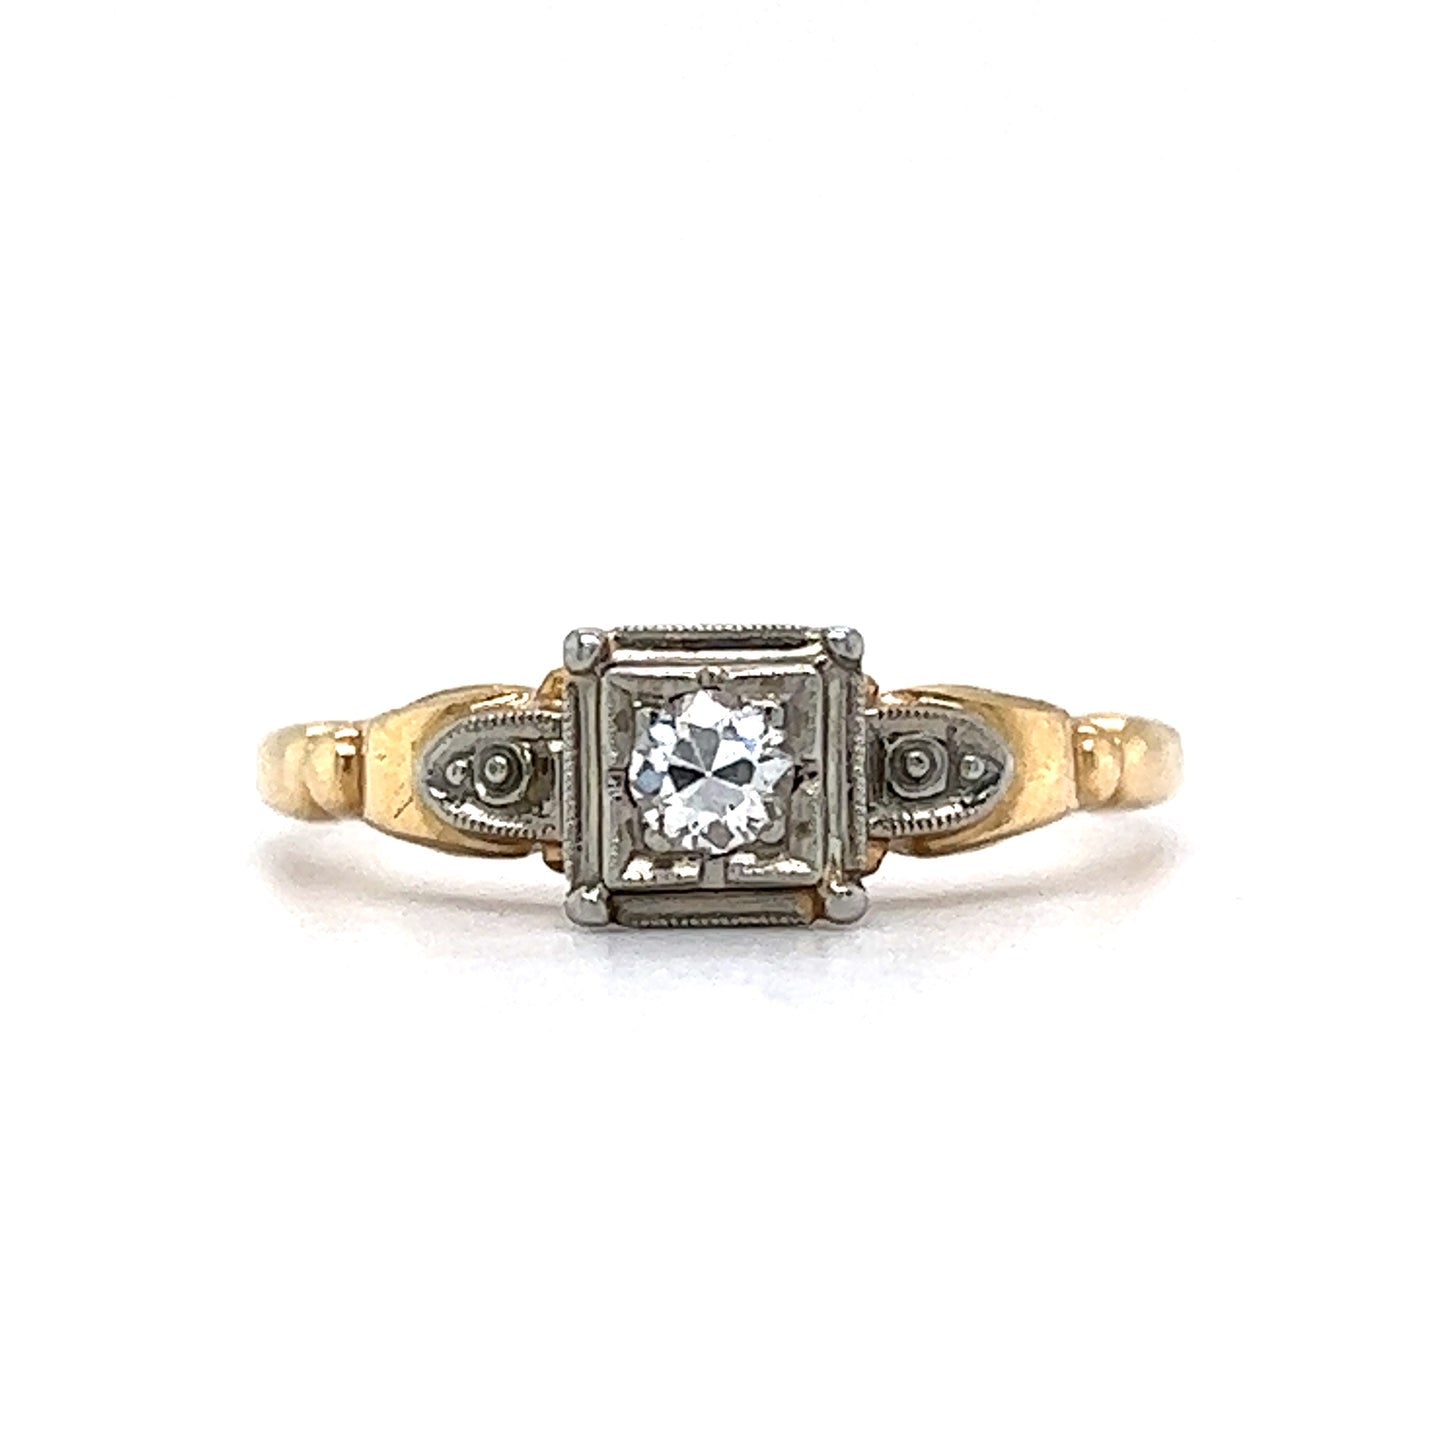 .12 Old European Diamond Engagement Ring in 14k Yellow Gold